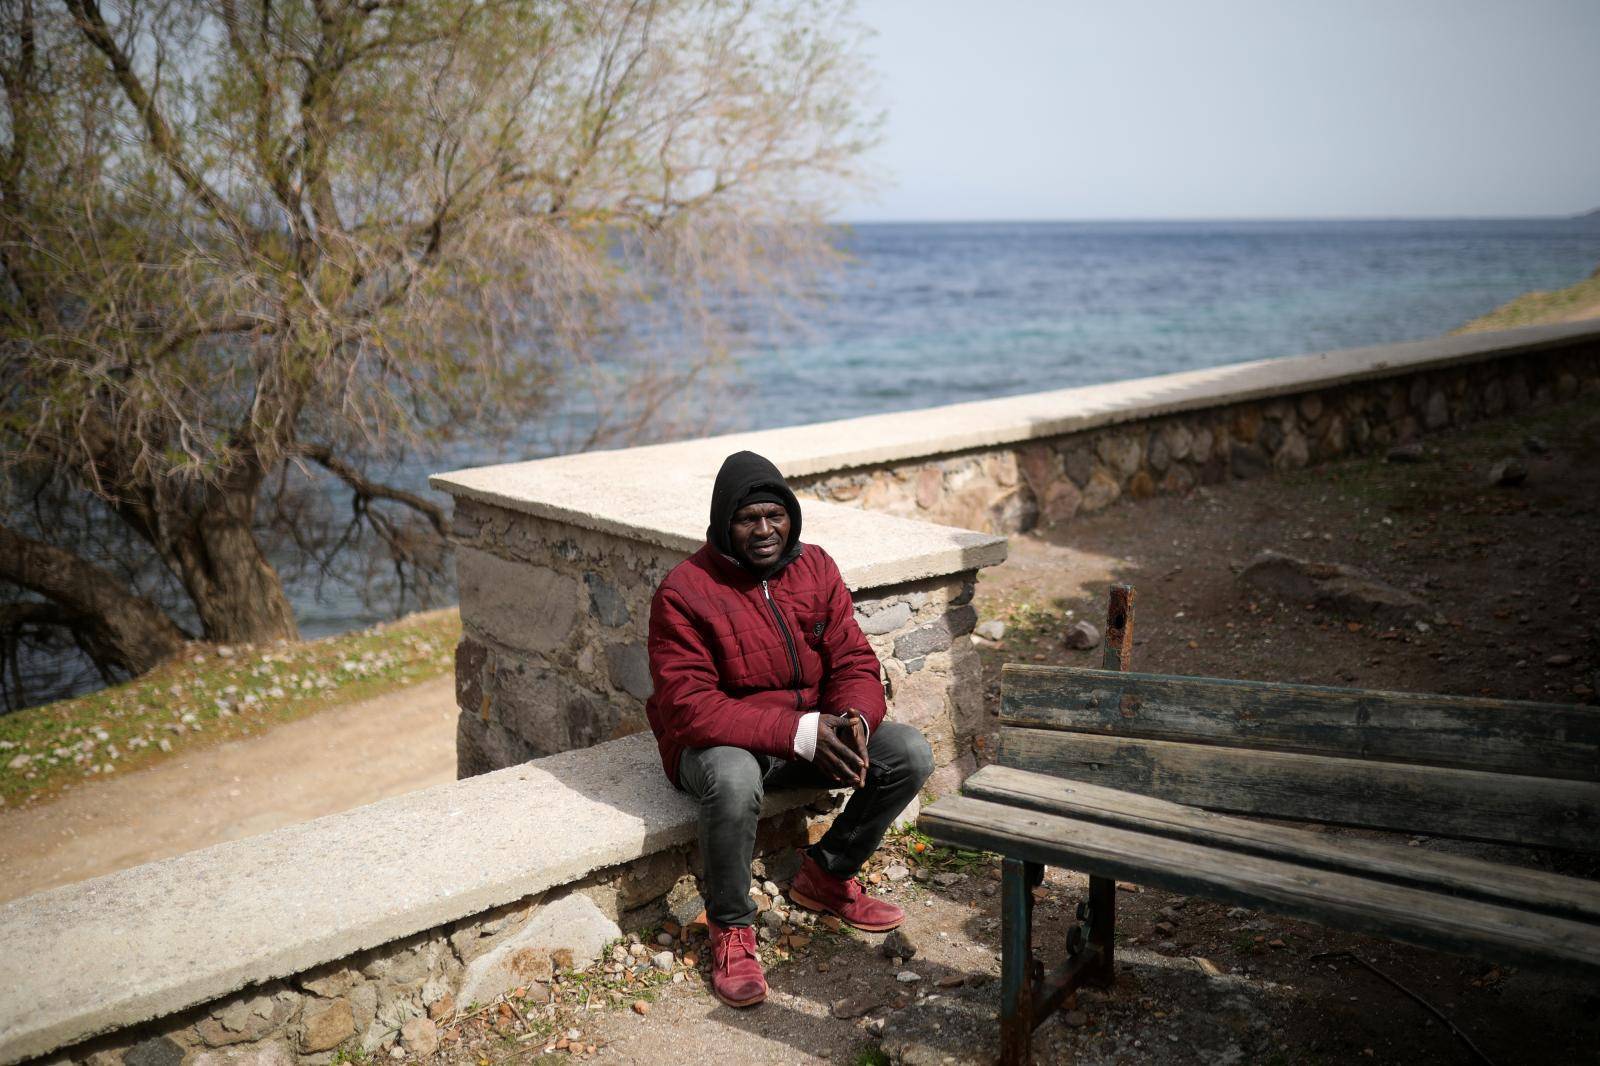 Grčko selo dobrih ljudi: 'Svi mi želimo pomagati izbjeglicama'